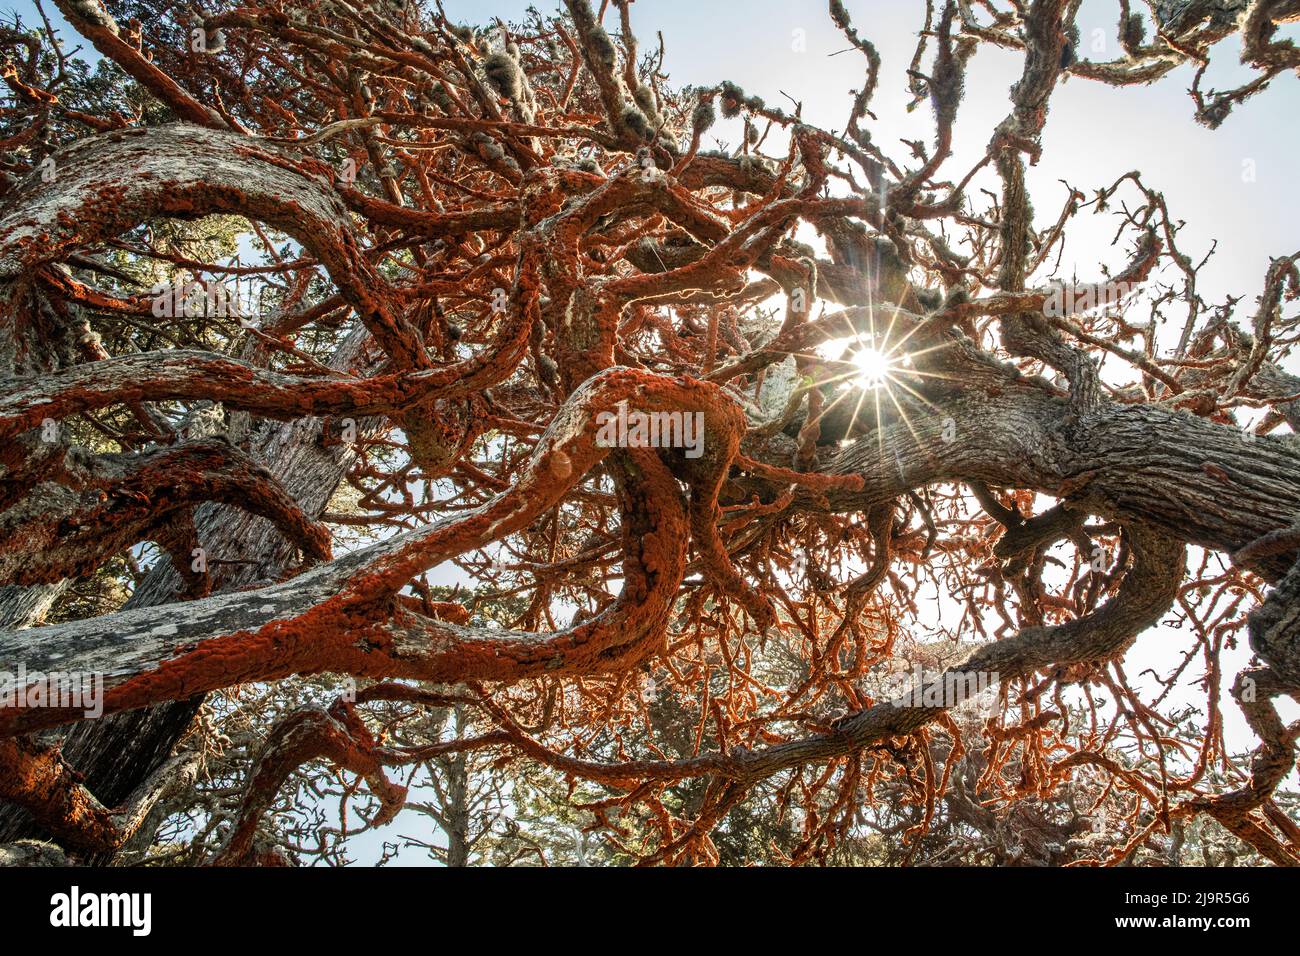 Monterey cypress trees covered in orange algae (Trentepohlia flava) in Point Lobos state park, California. Stock Photo